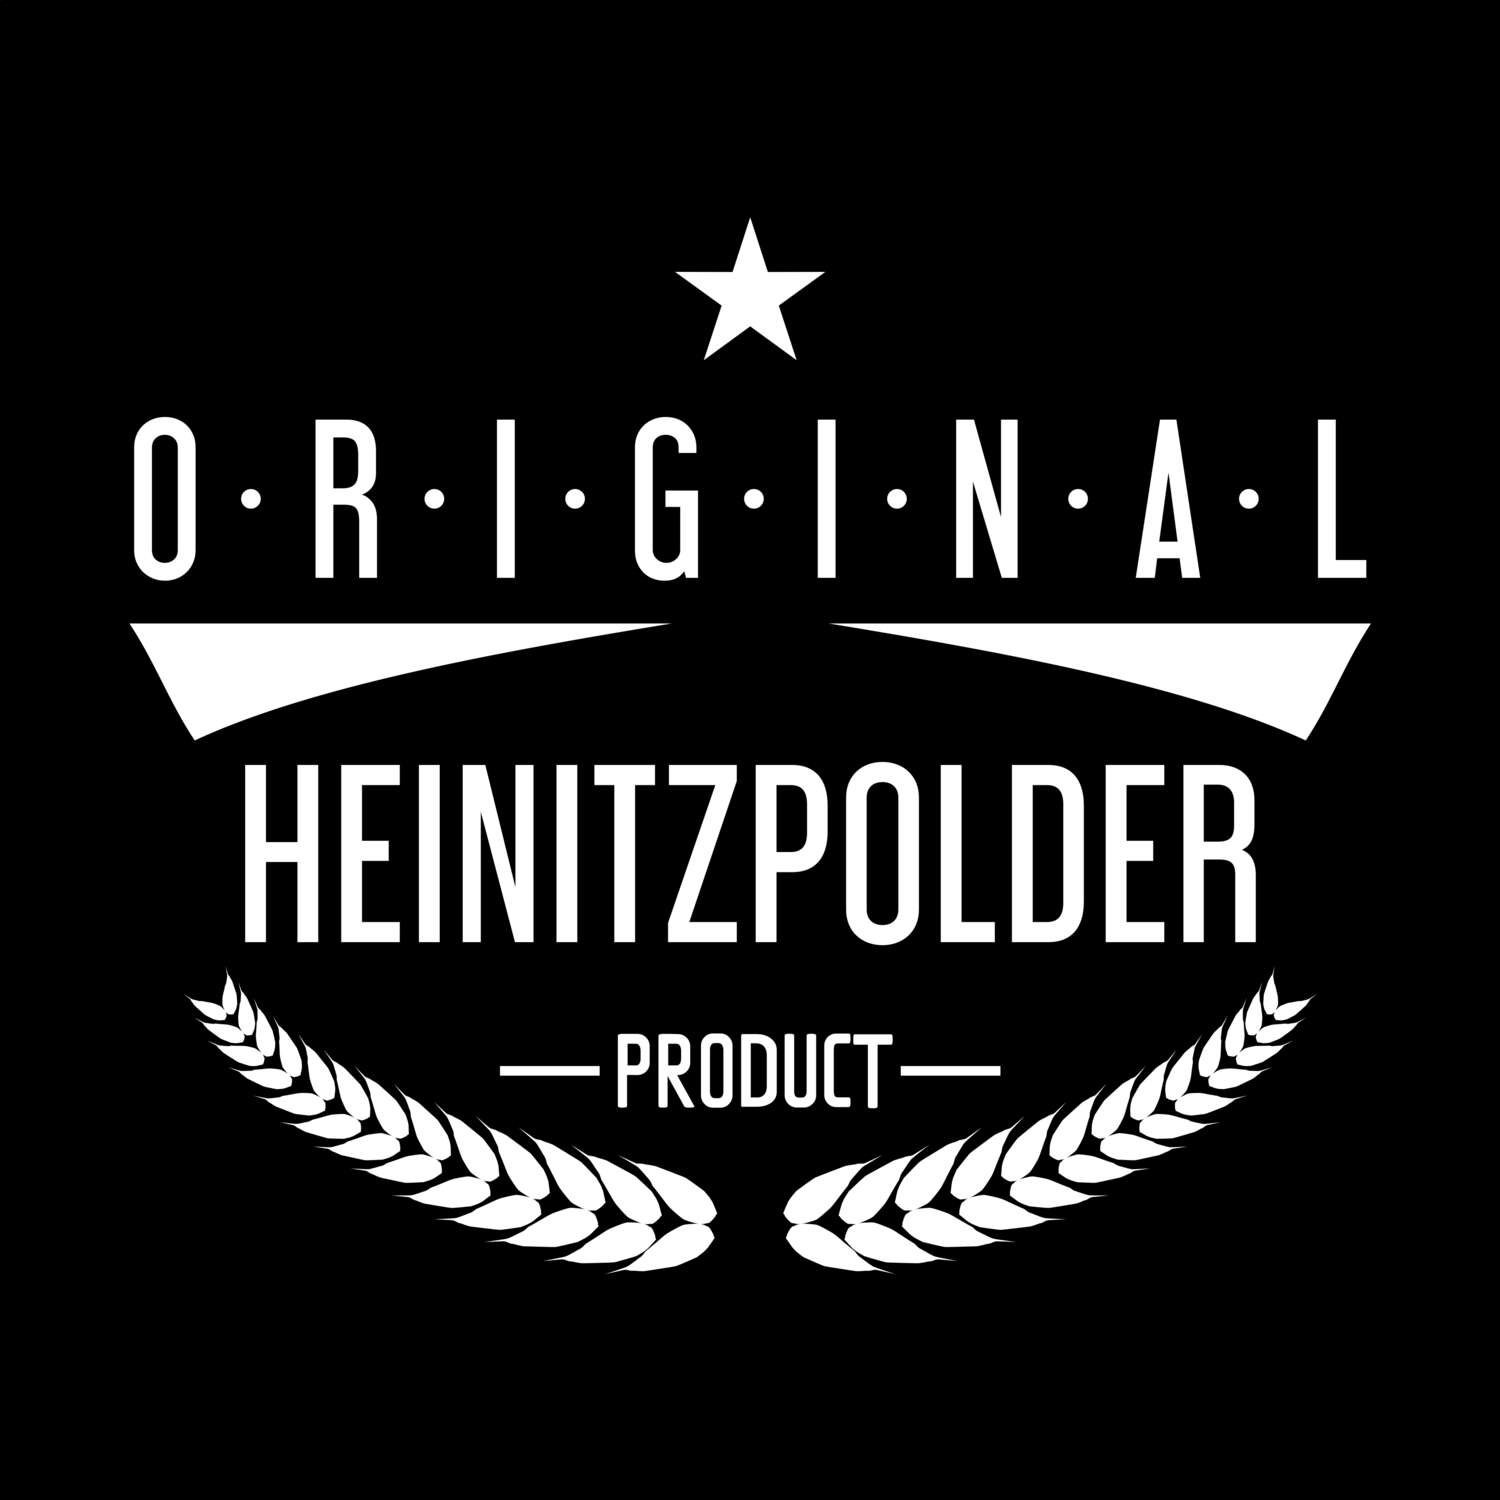 Heinitzpolder T-Shirt »Original Product«